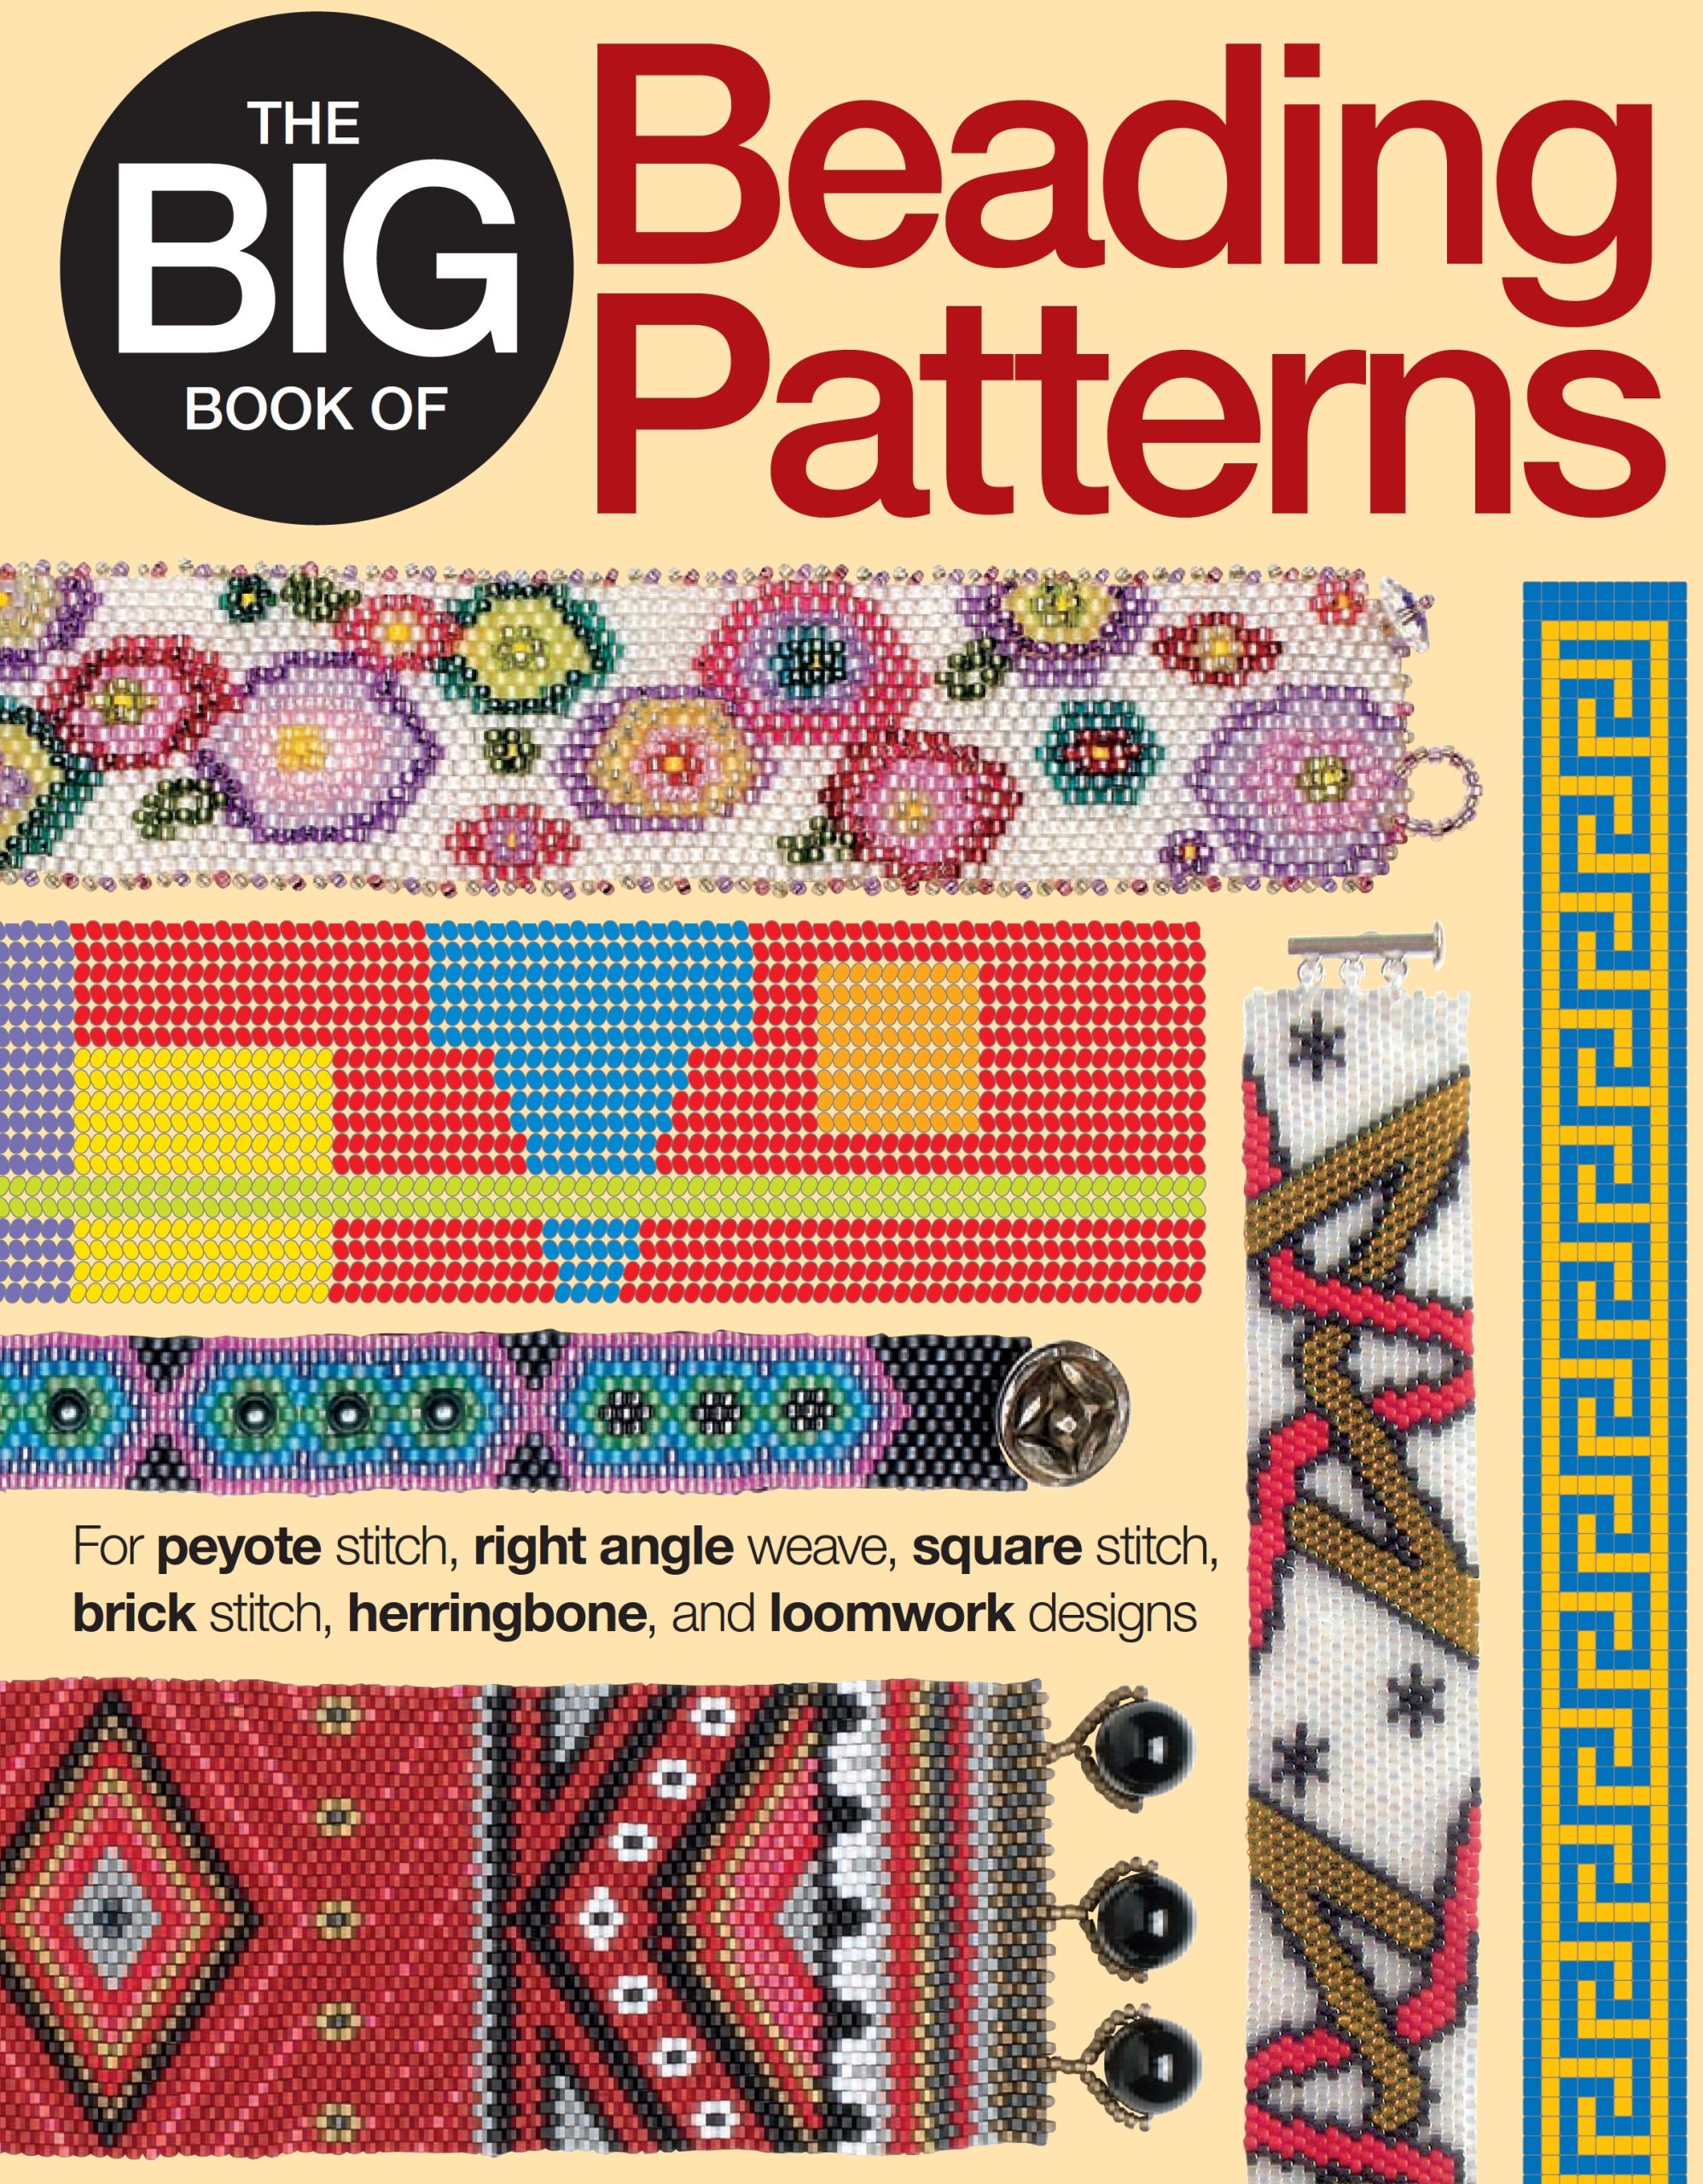 The Big Book of Beading Patterns/Peyote Stitch/Square Stitch